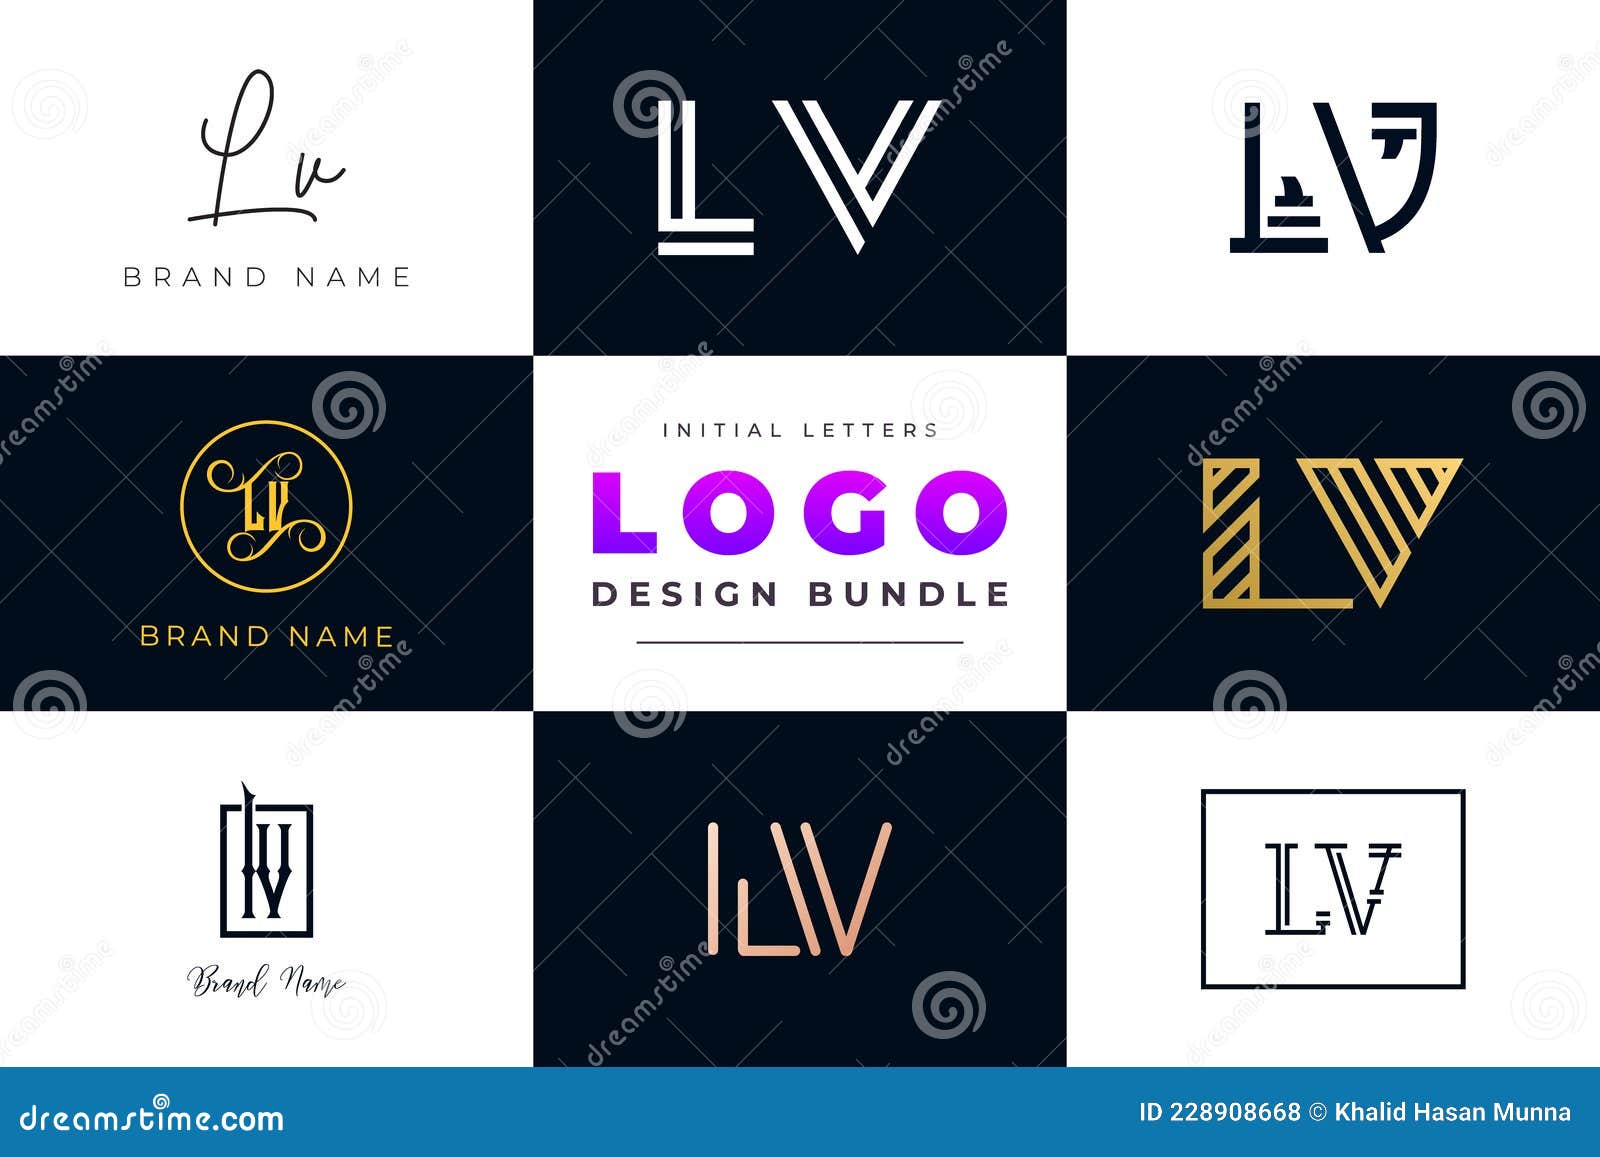 pattern lv logo design